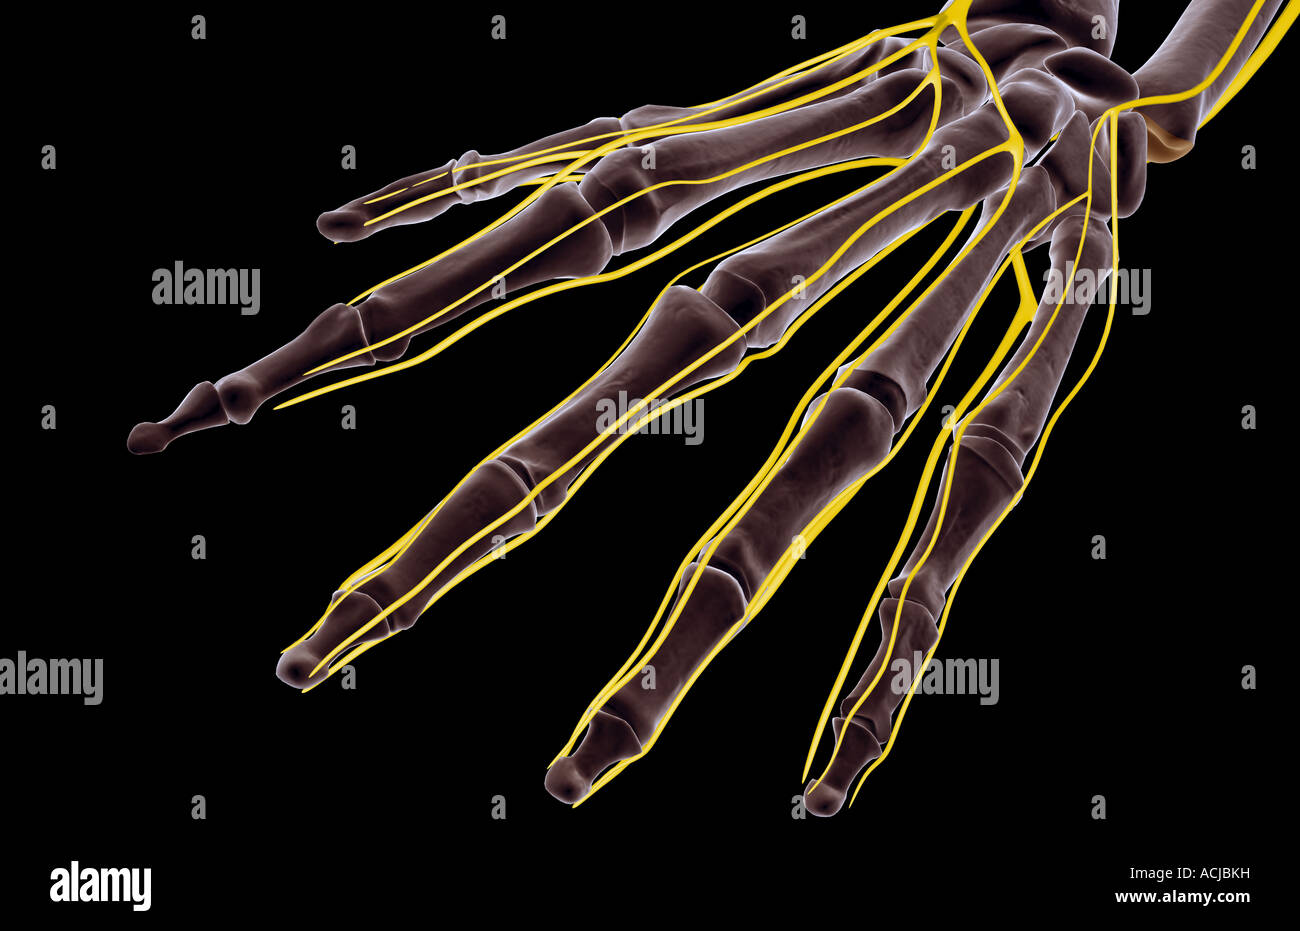 Human Hand Nerves Illustration Stock Photos & Human Hand Nerves